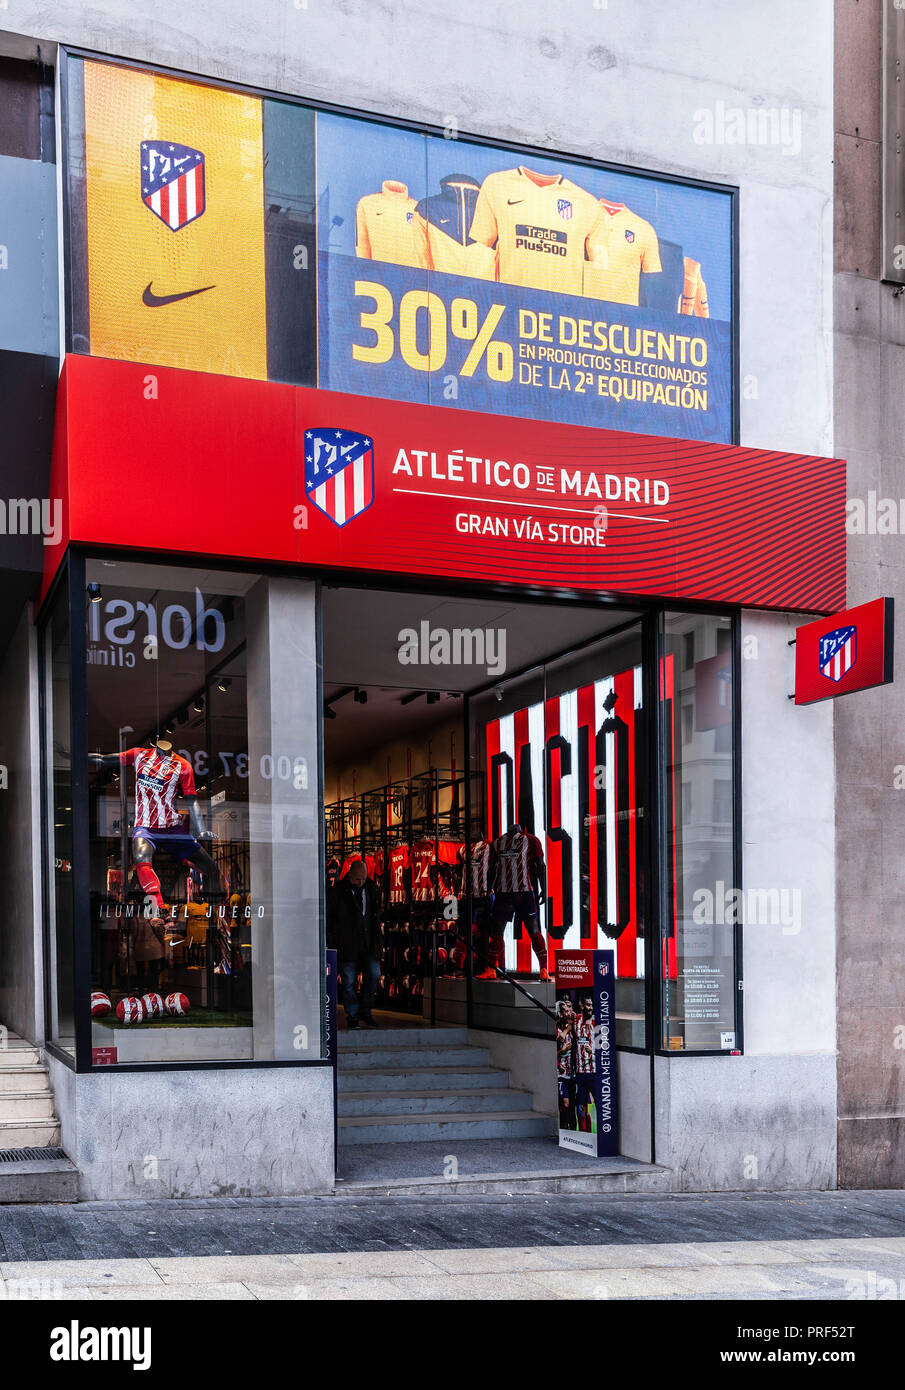 Atlético de Madrid, Gran Via, Madrid, Espagne. Banque D'Images